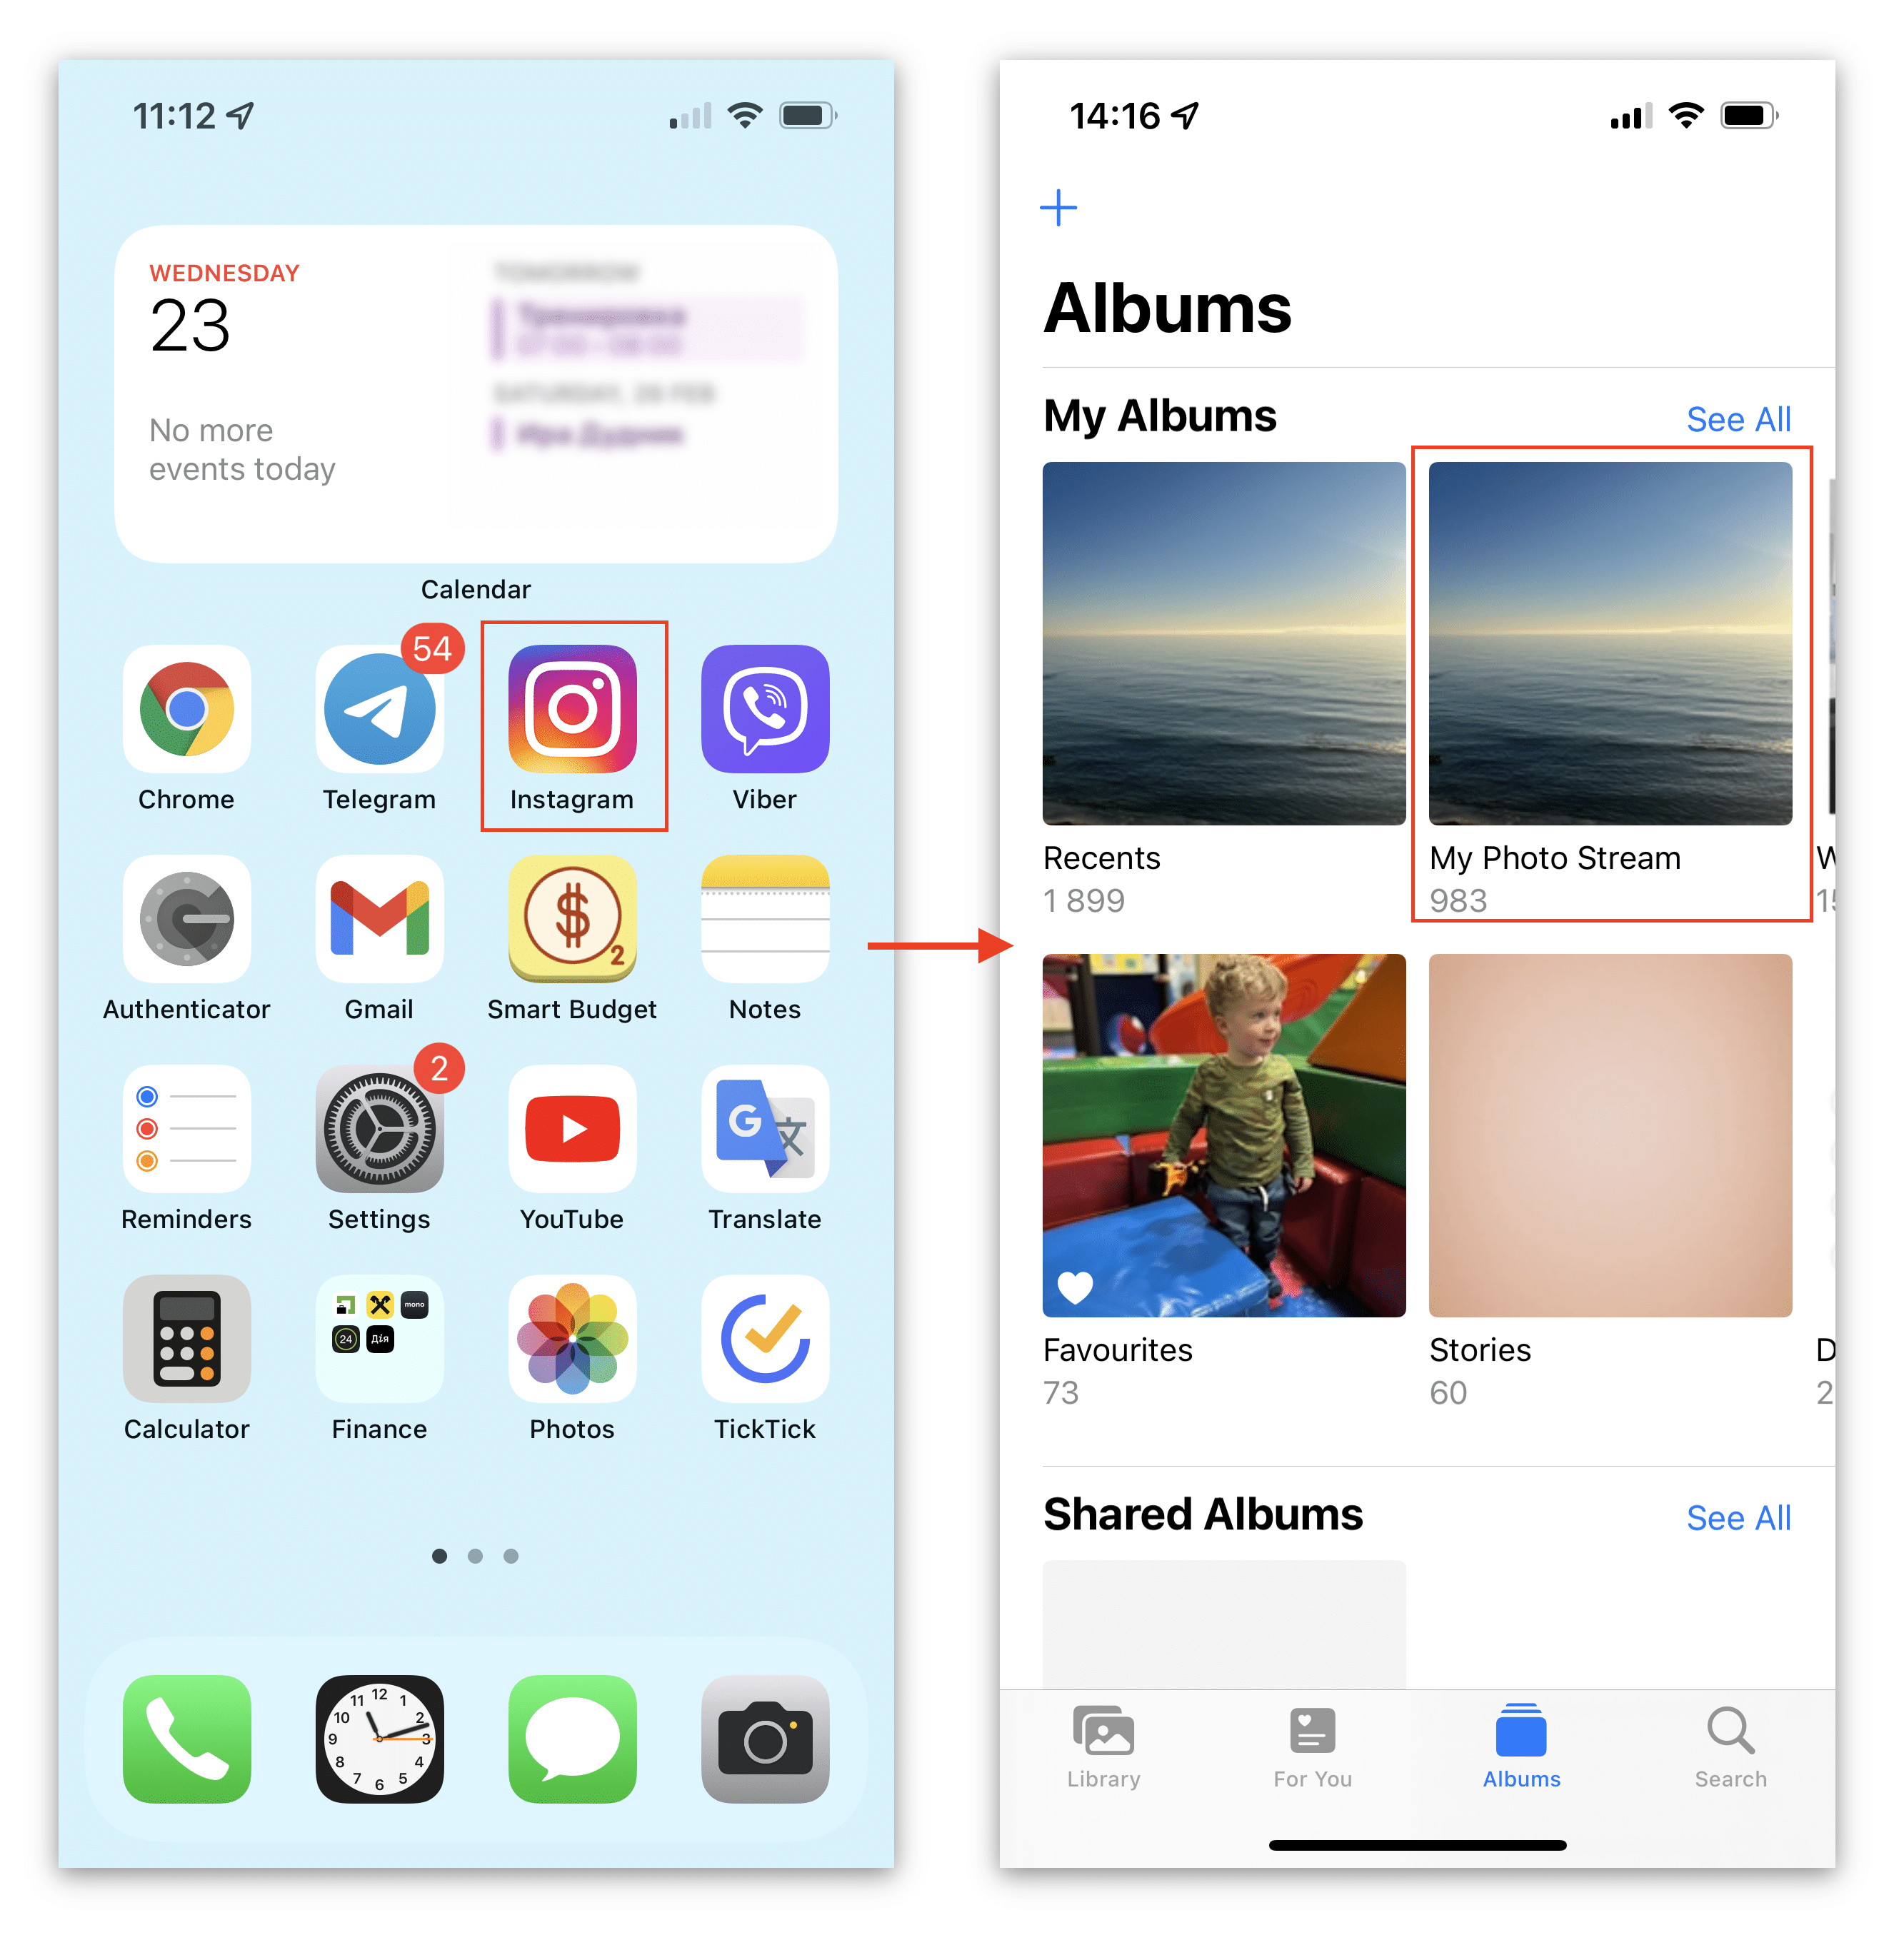 iphone screen showing My Photo Stream album